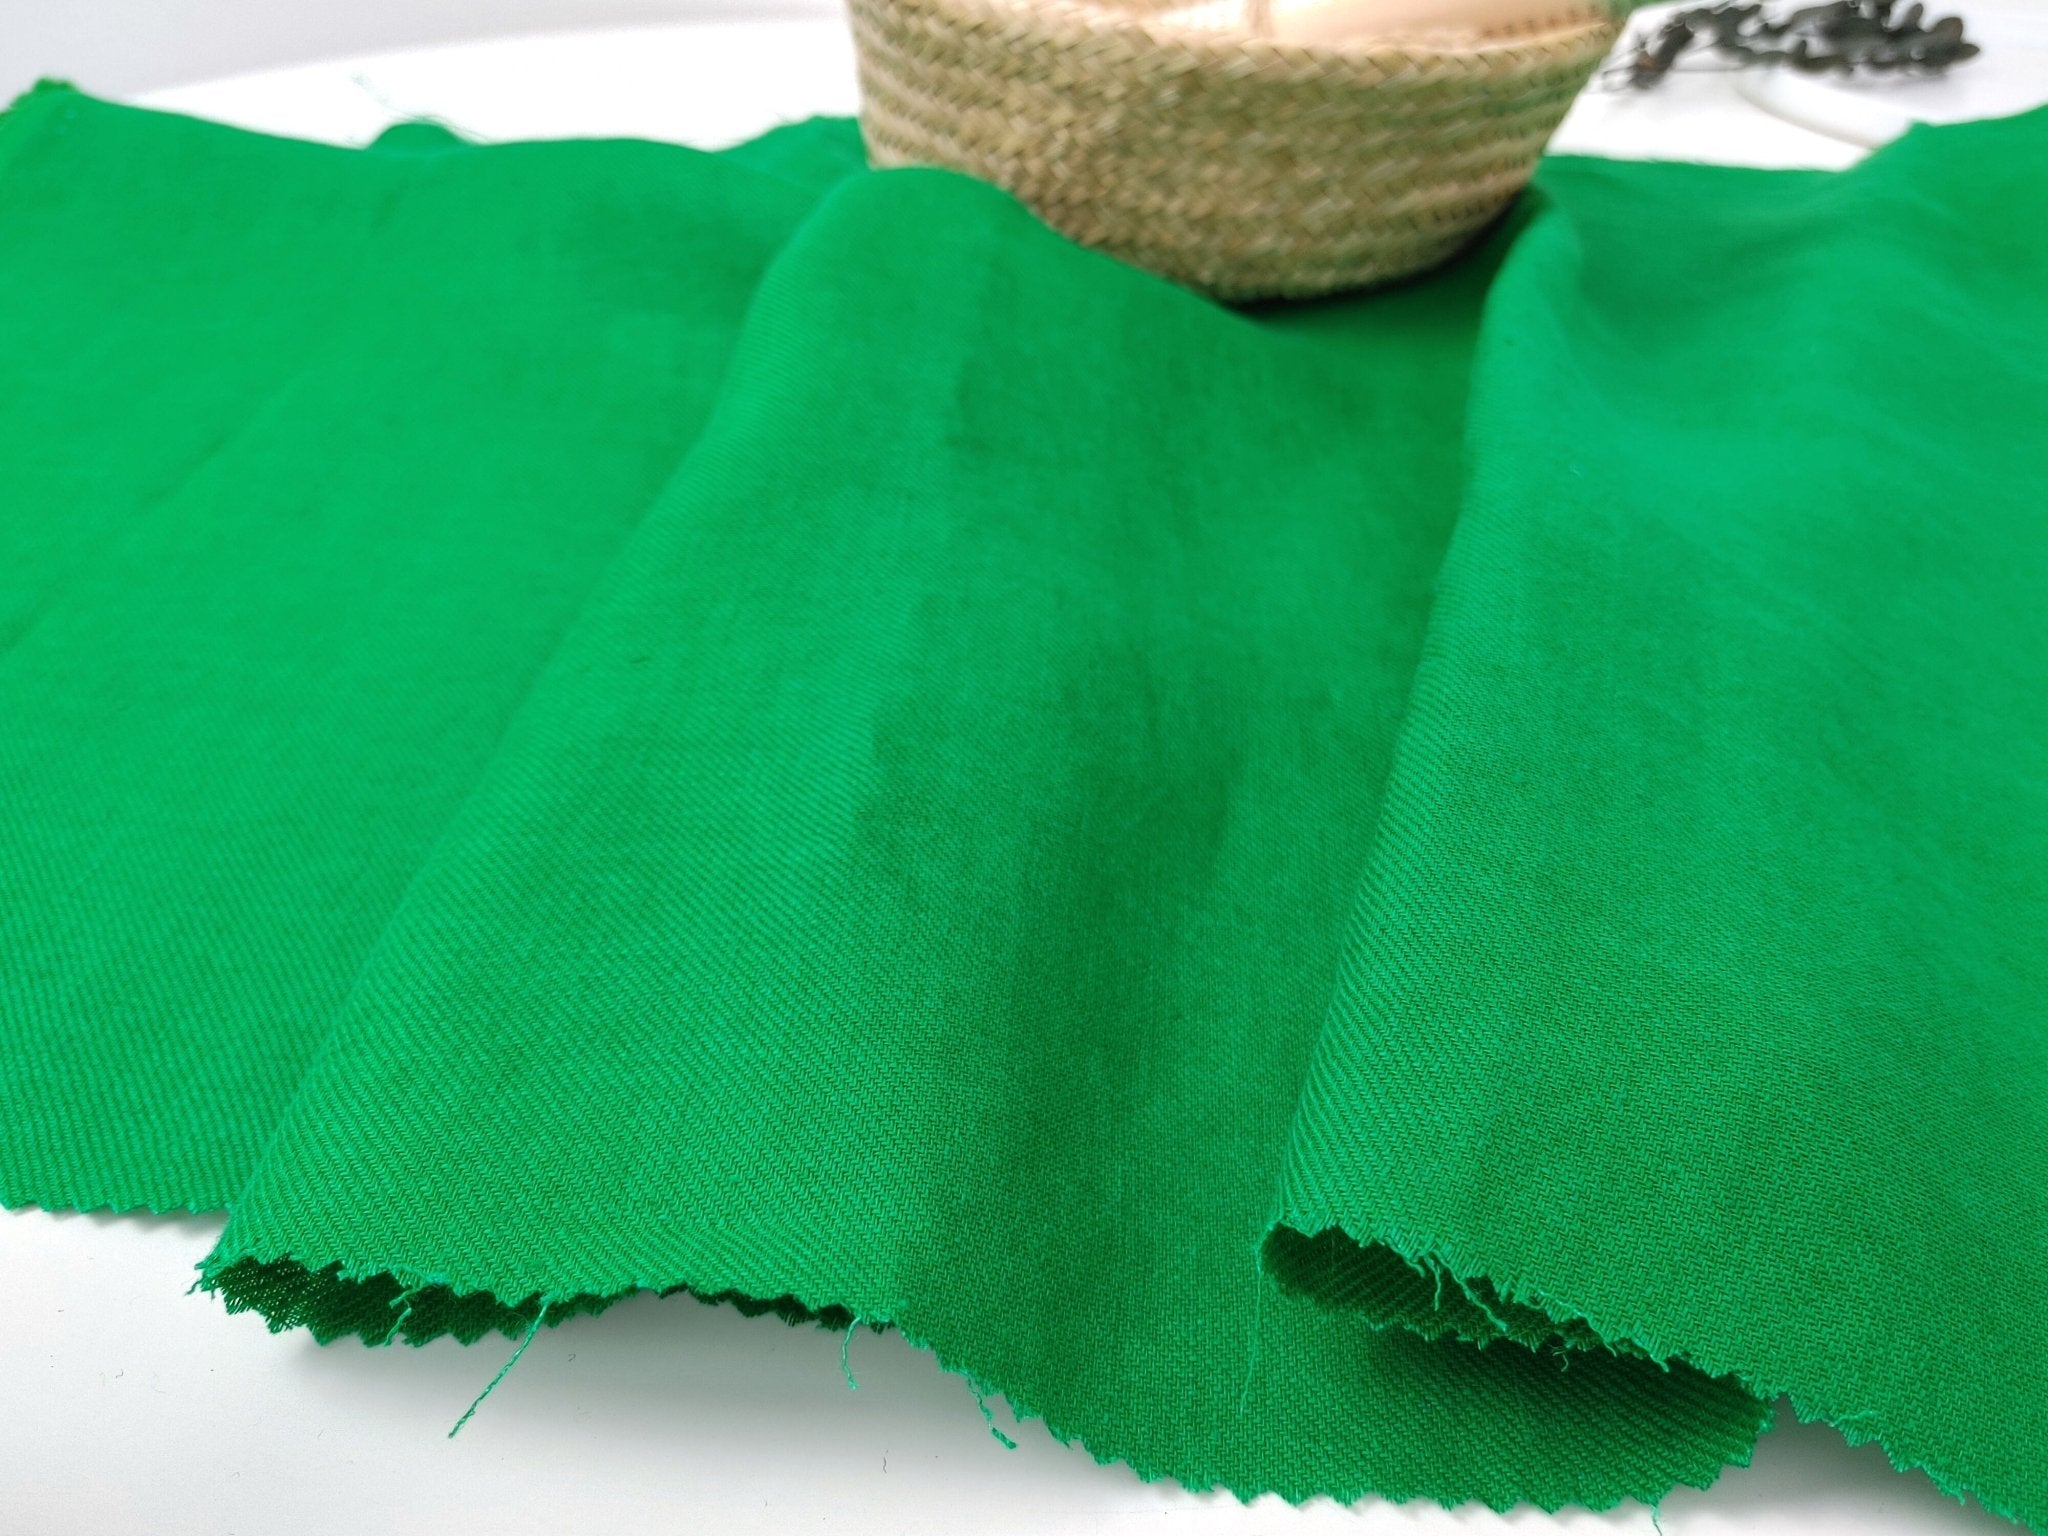 Twill Weave 100% Linen Fabric - Medium Weight in Green 7595 - The Linen Lab - Green